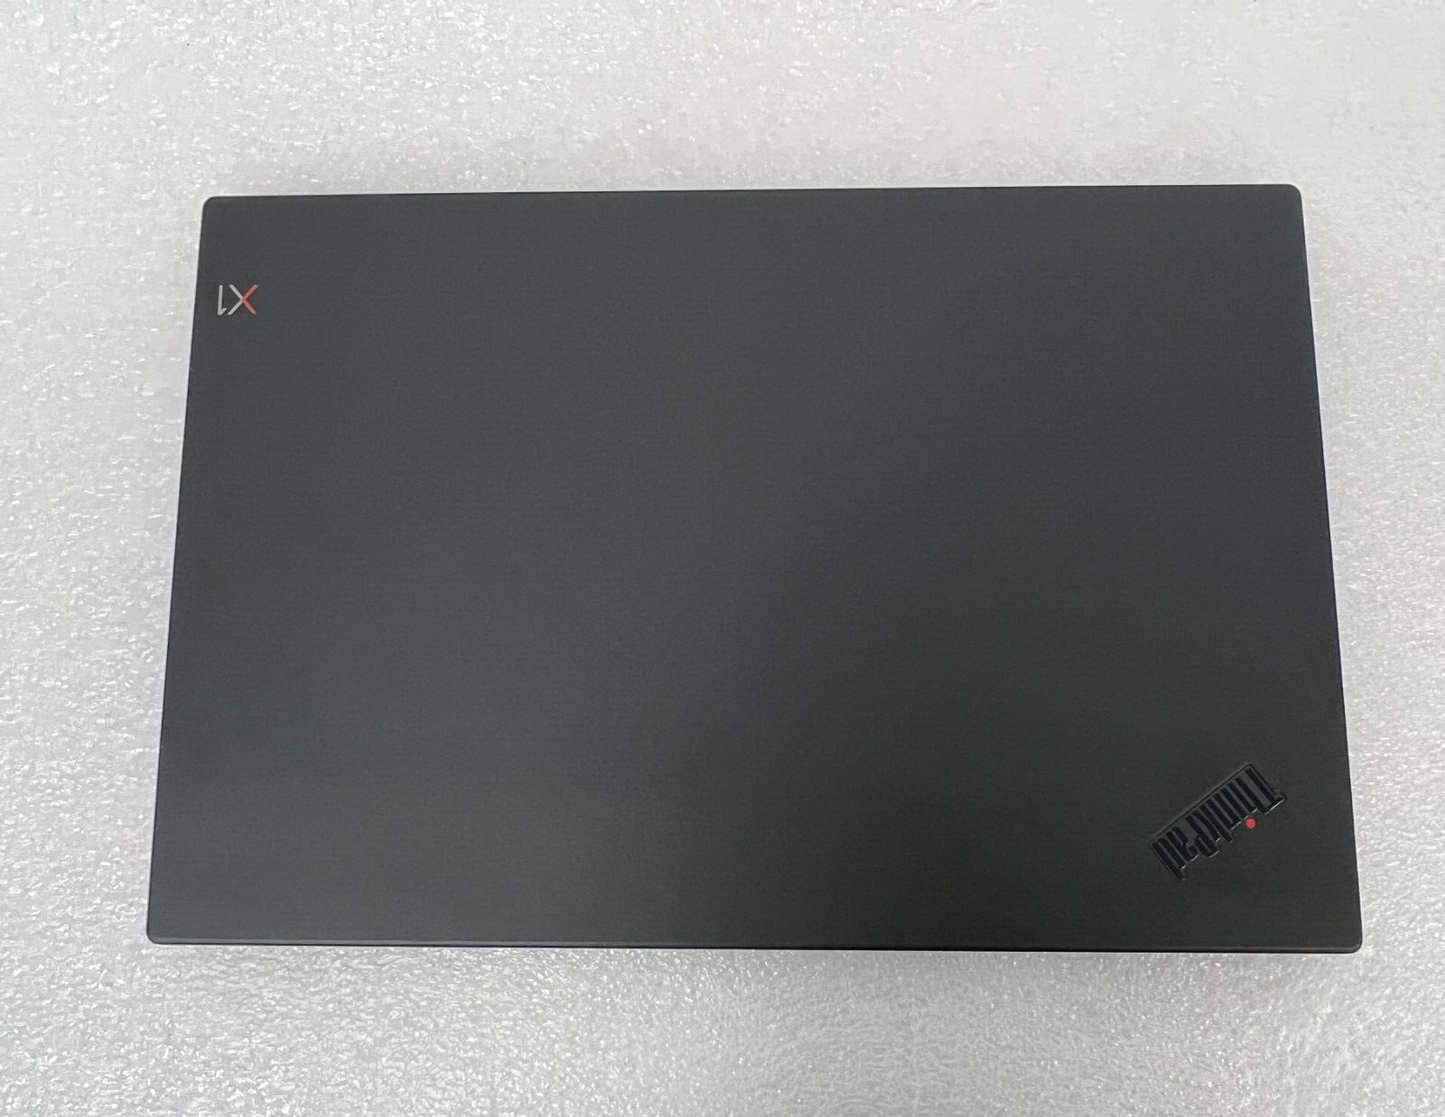 Lenovo Thinkpad X1 Carbon 6th Gen 14" i5-8250U Turbo 3.40GHz 8GB 512GB SSD VGOOD